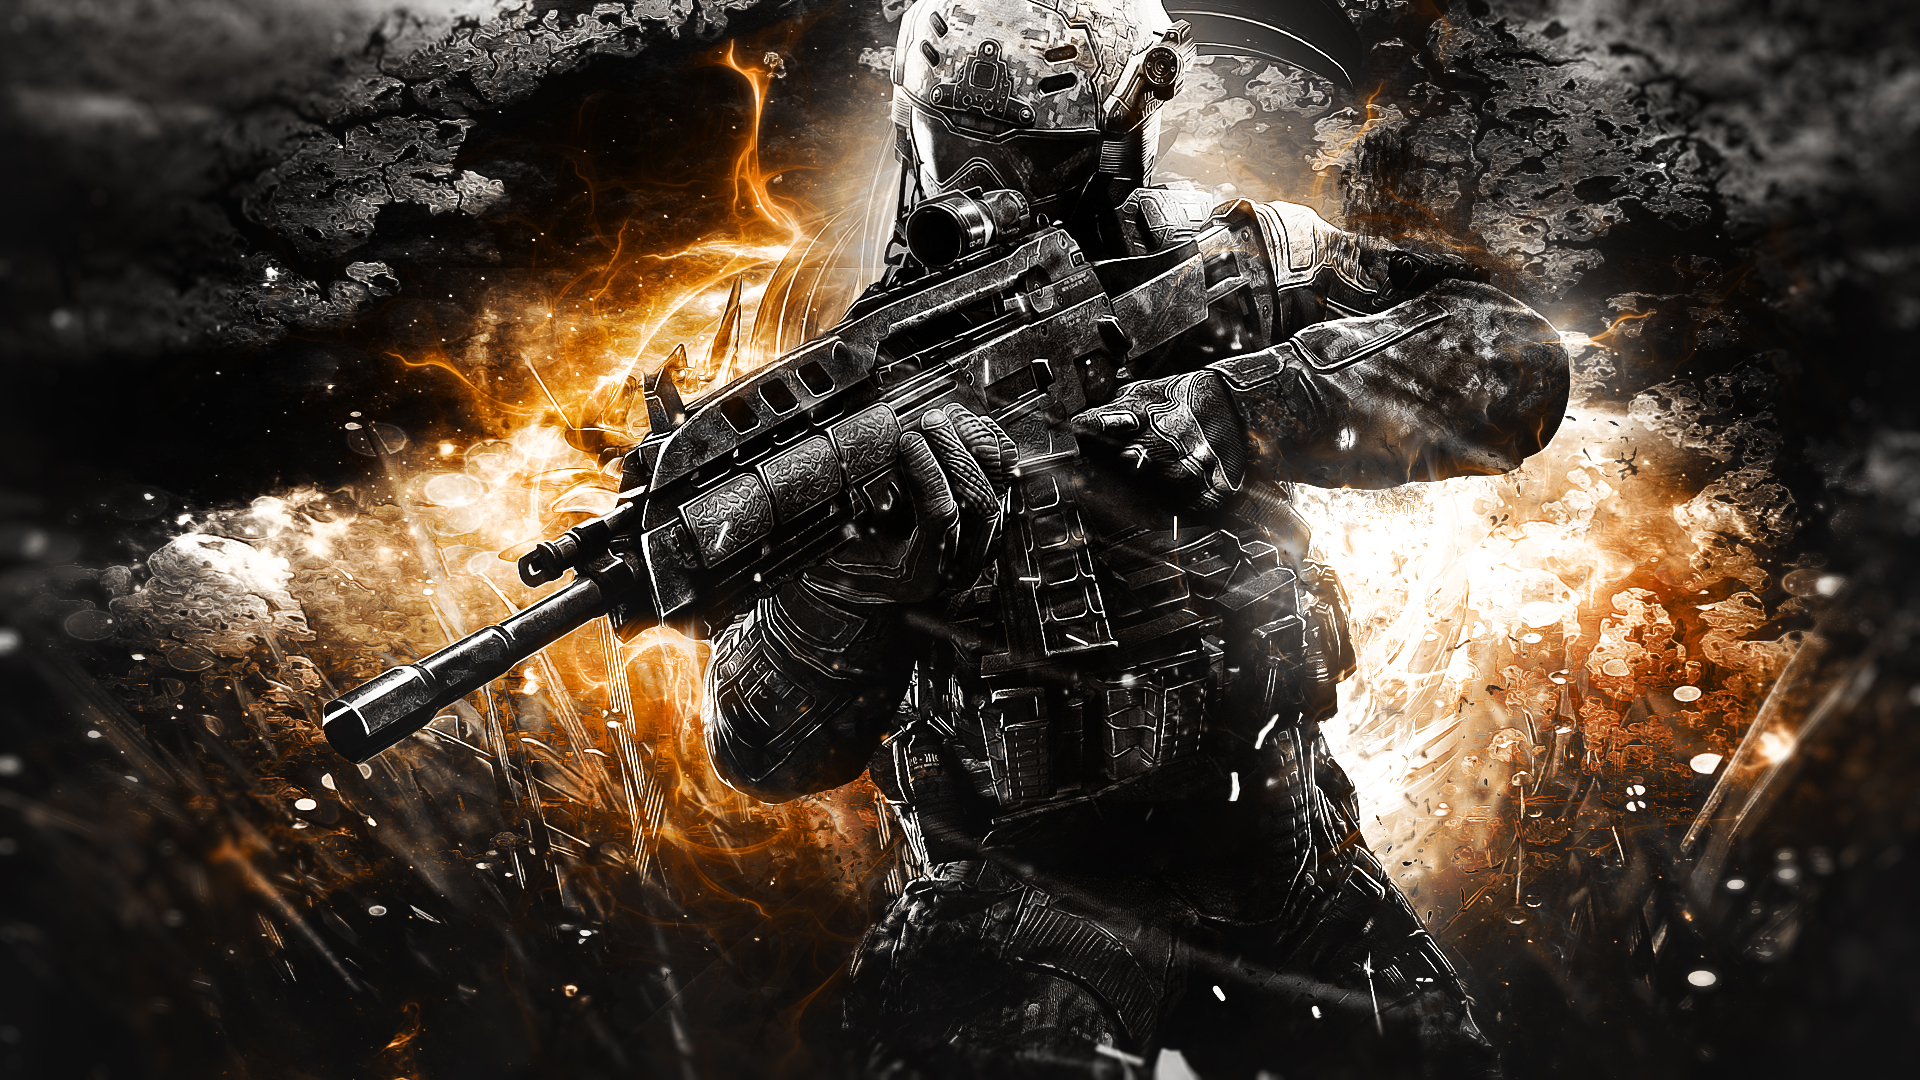 Amazoncom: Call of Duty: Black Ops II - PC: Video Games